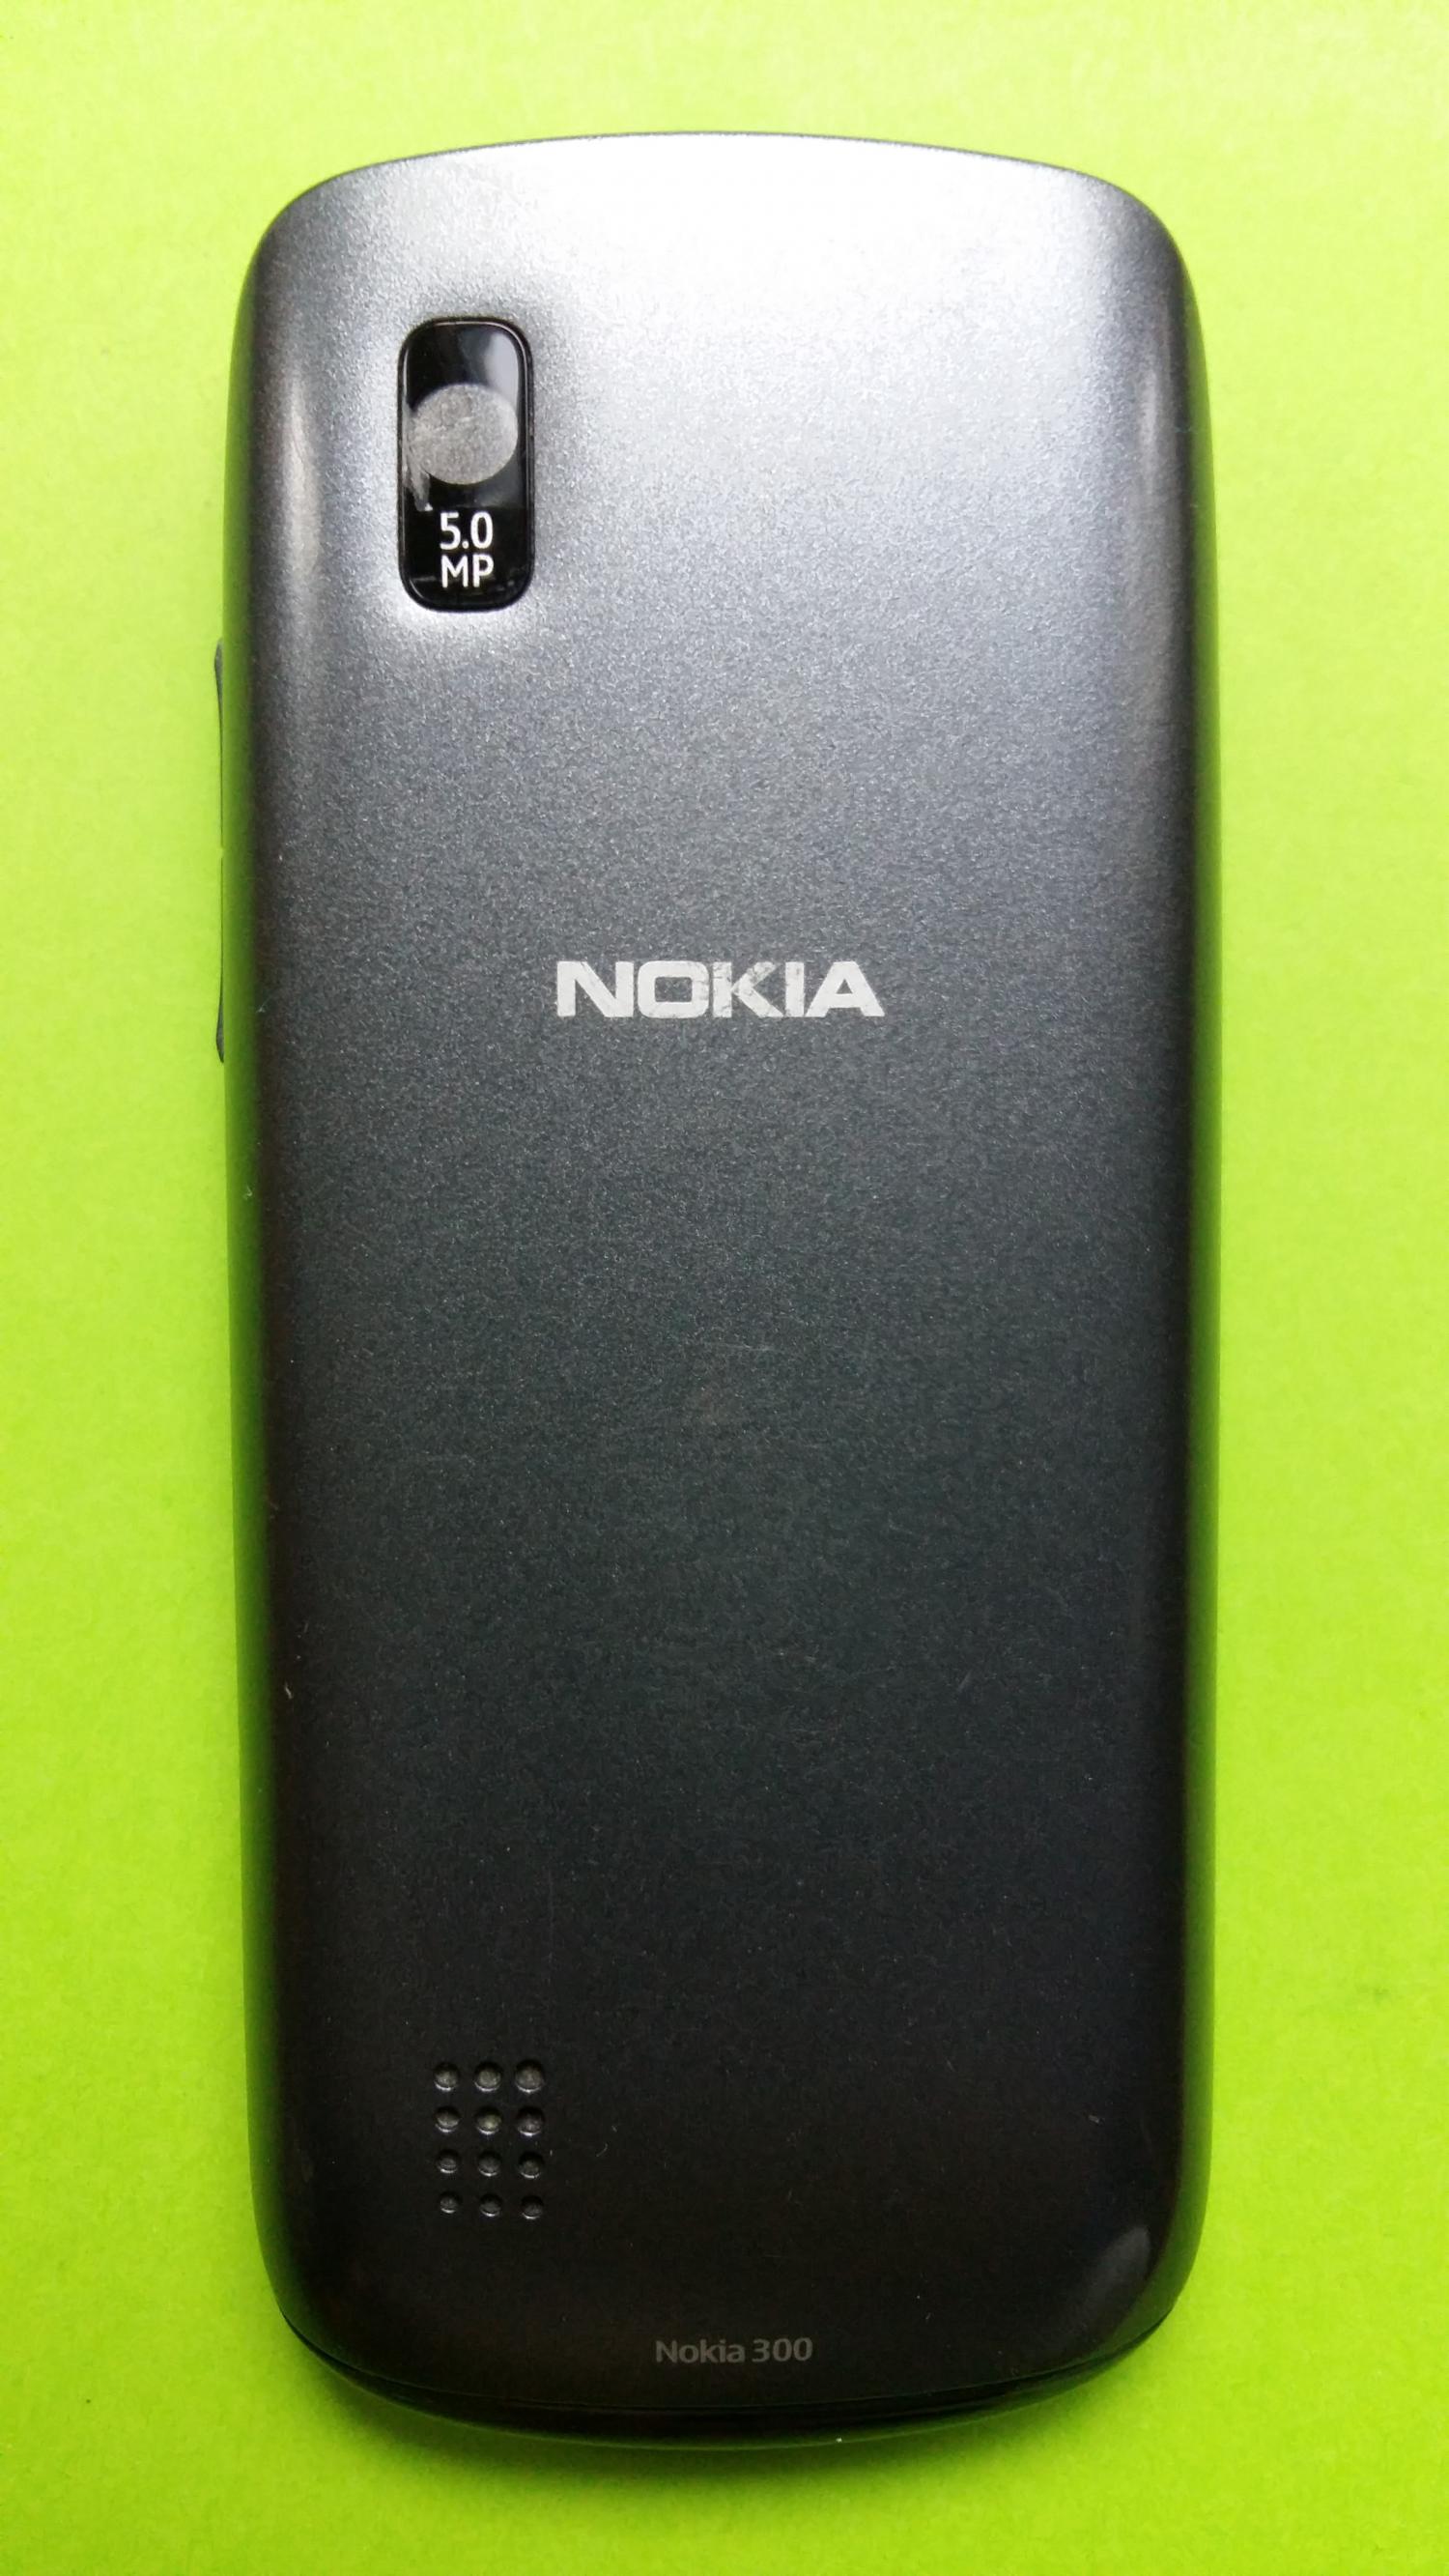 image-7300146-Nokia 300 Asha (1)2.jpg